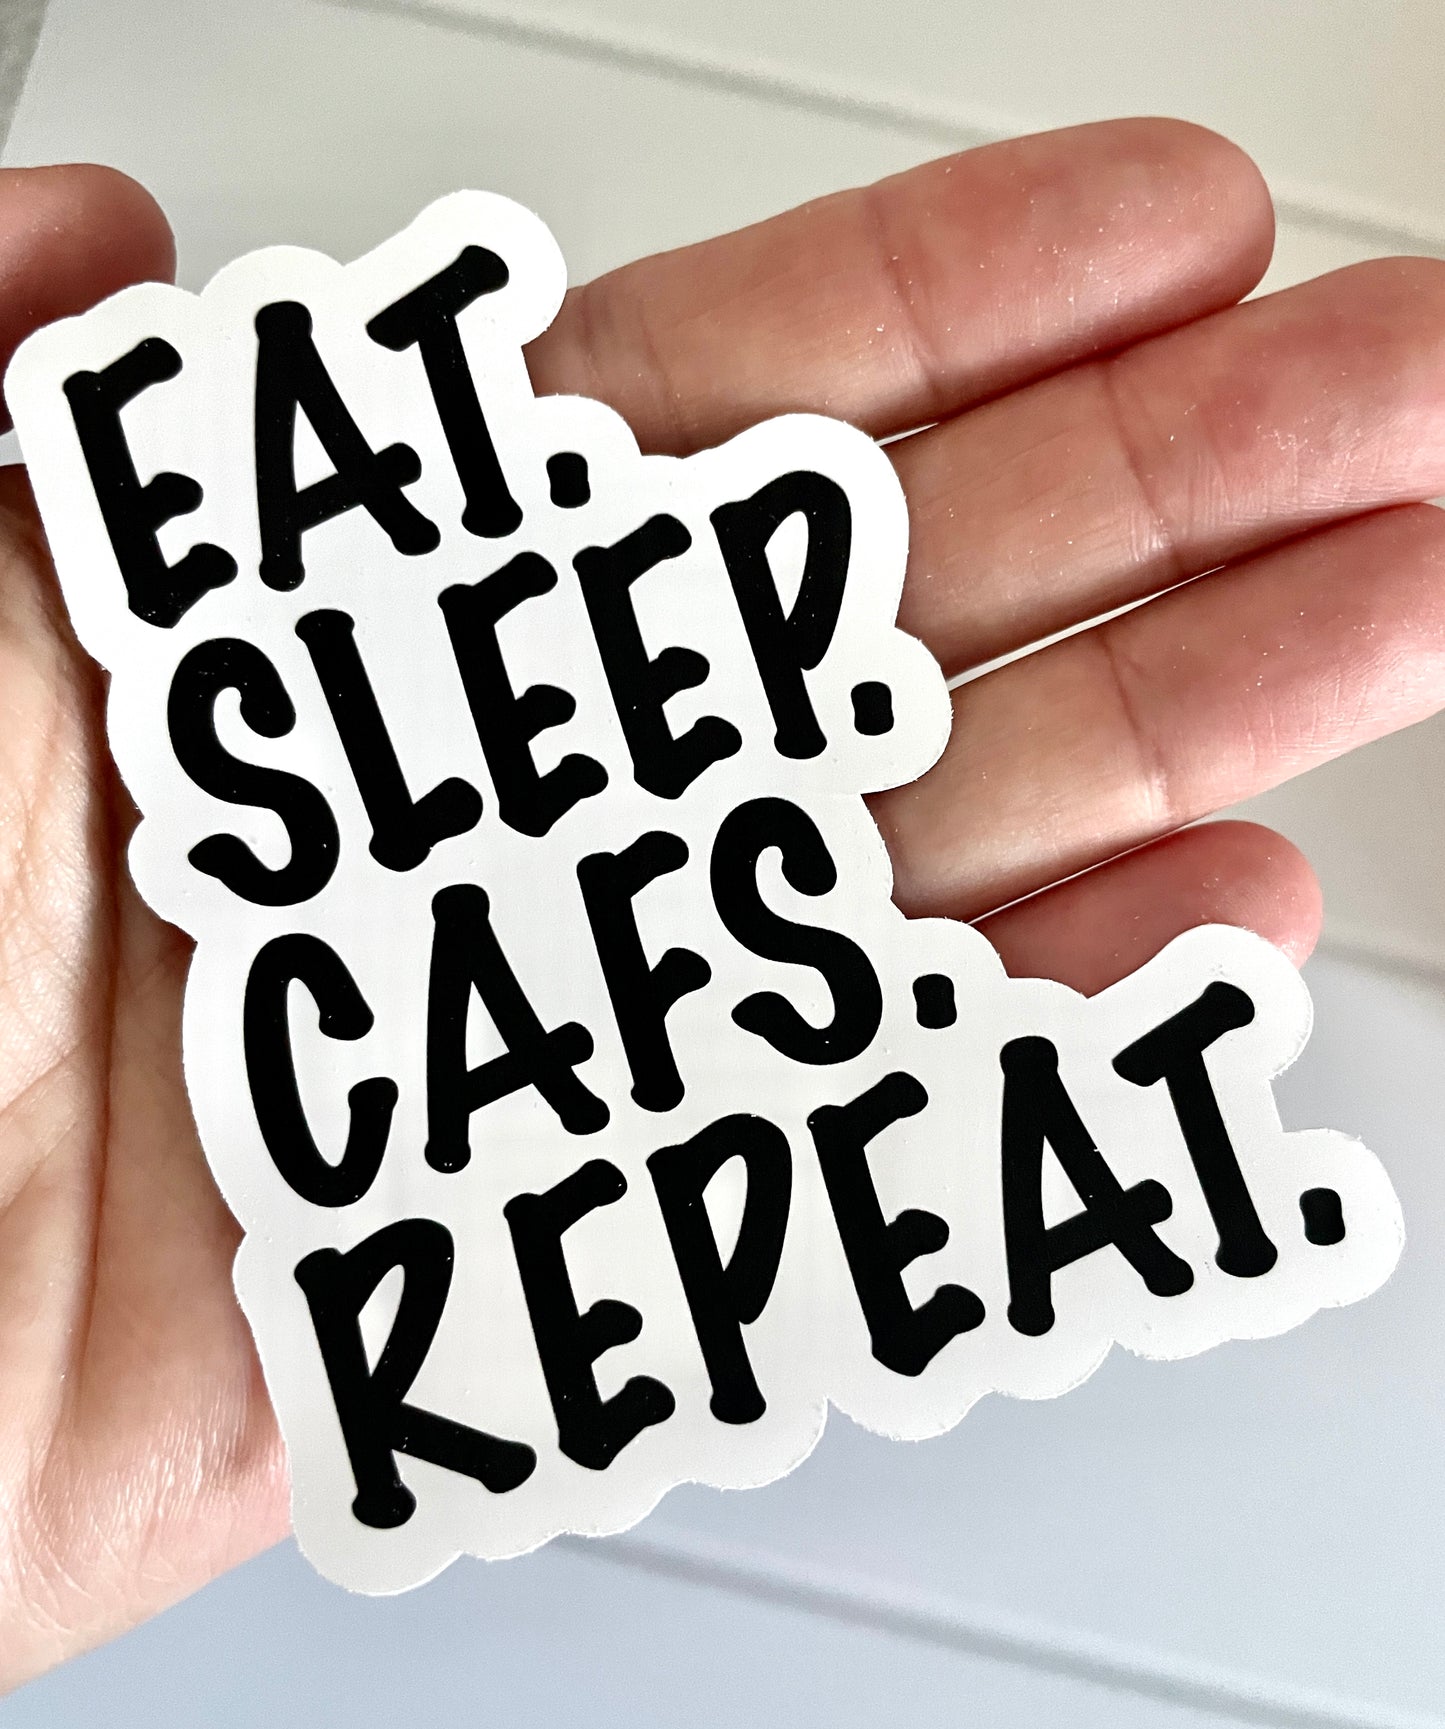 EAT. SLEEP. CAFS. REPEAT